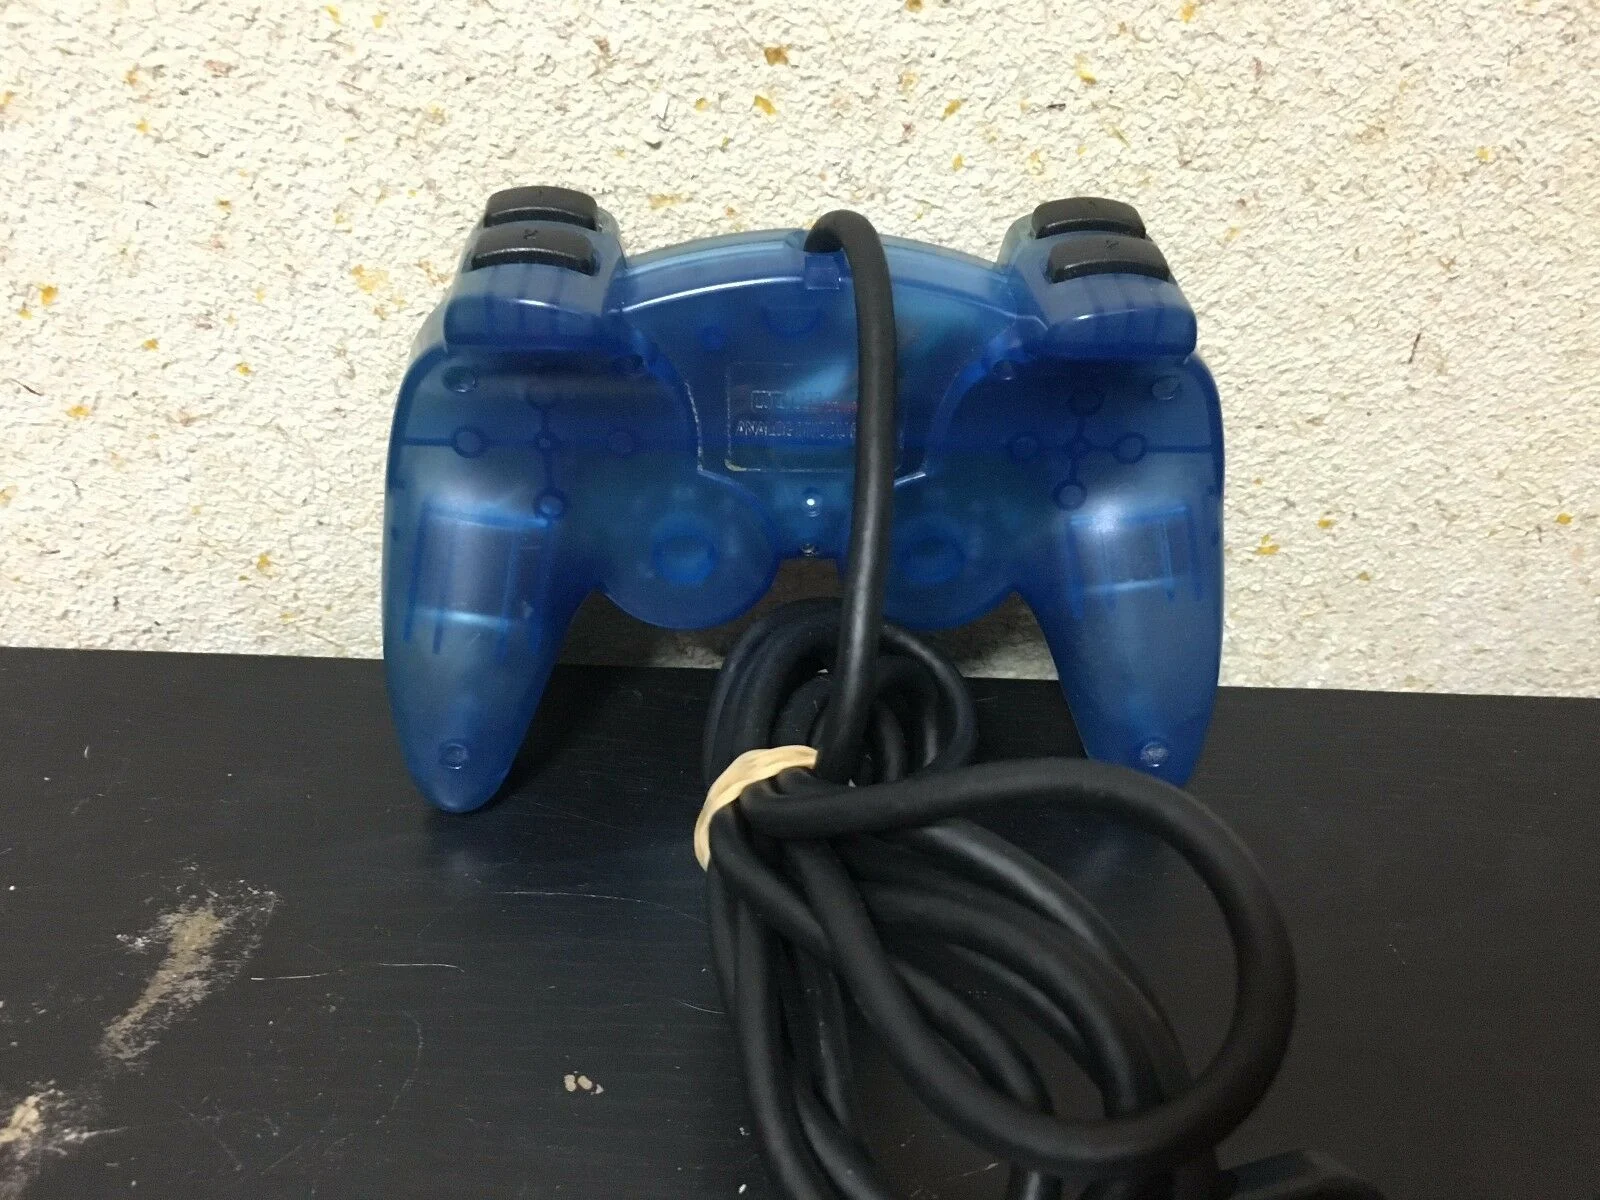  HORI Playstation Analog SINDOU Pad 2 Controller